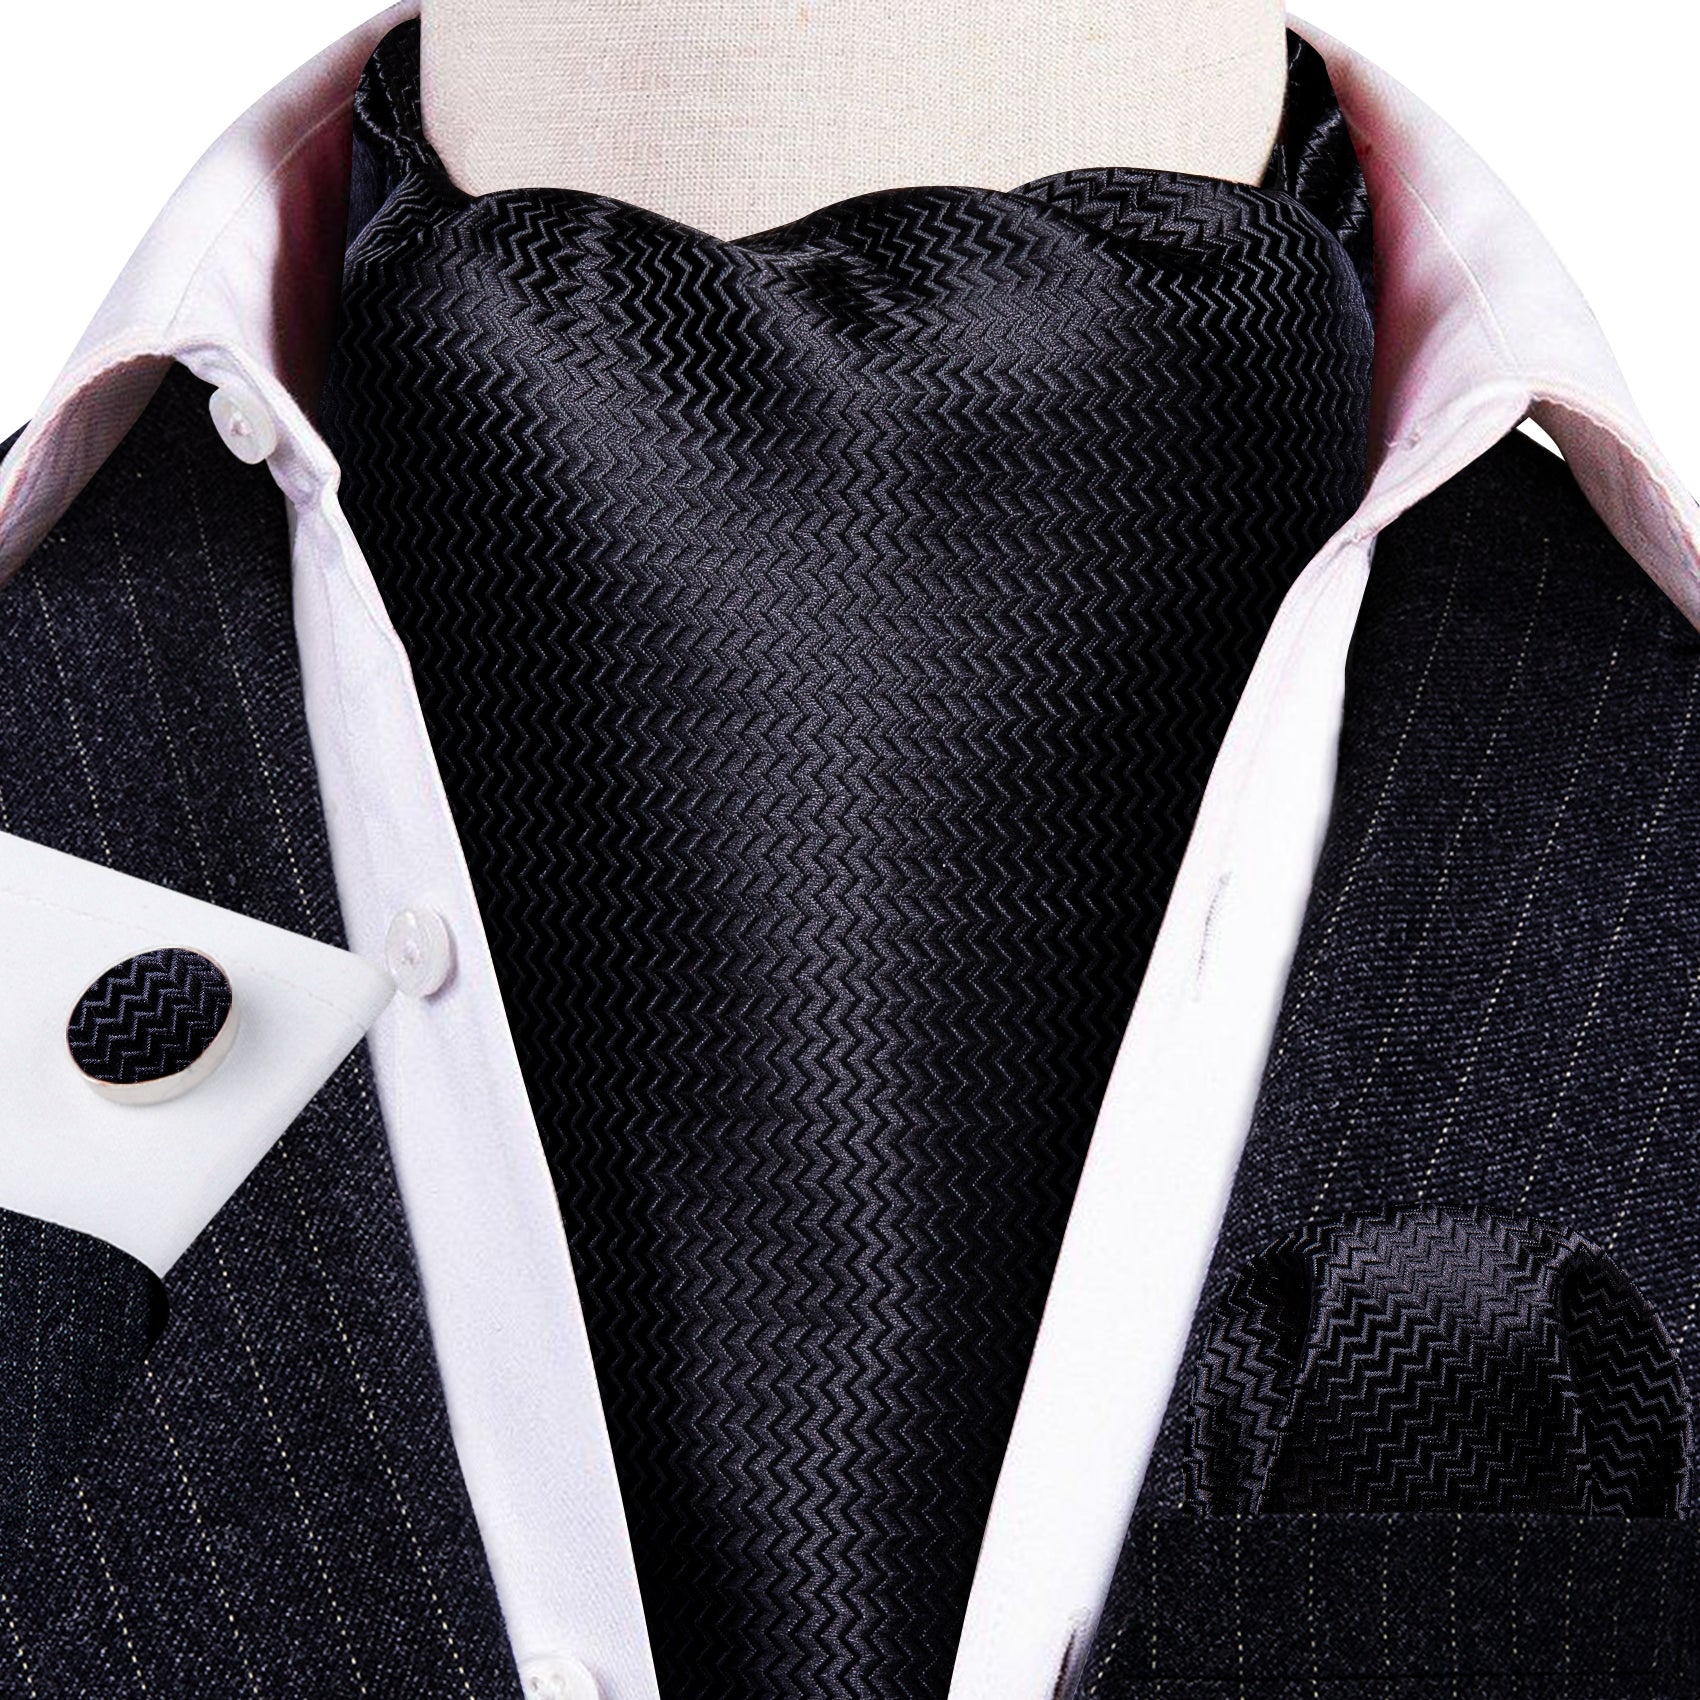 Barry.wang Black Tie Solid Silk Ascot Tie Handkerchief Cufflinks Set